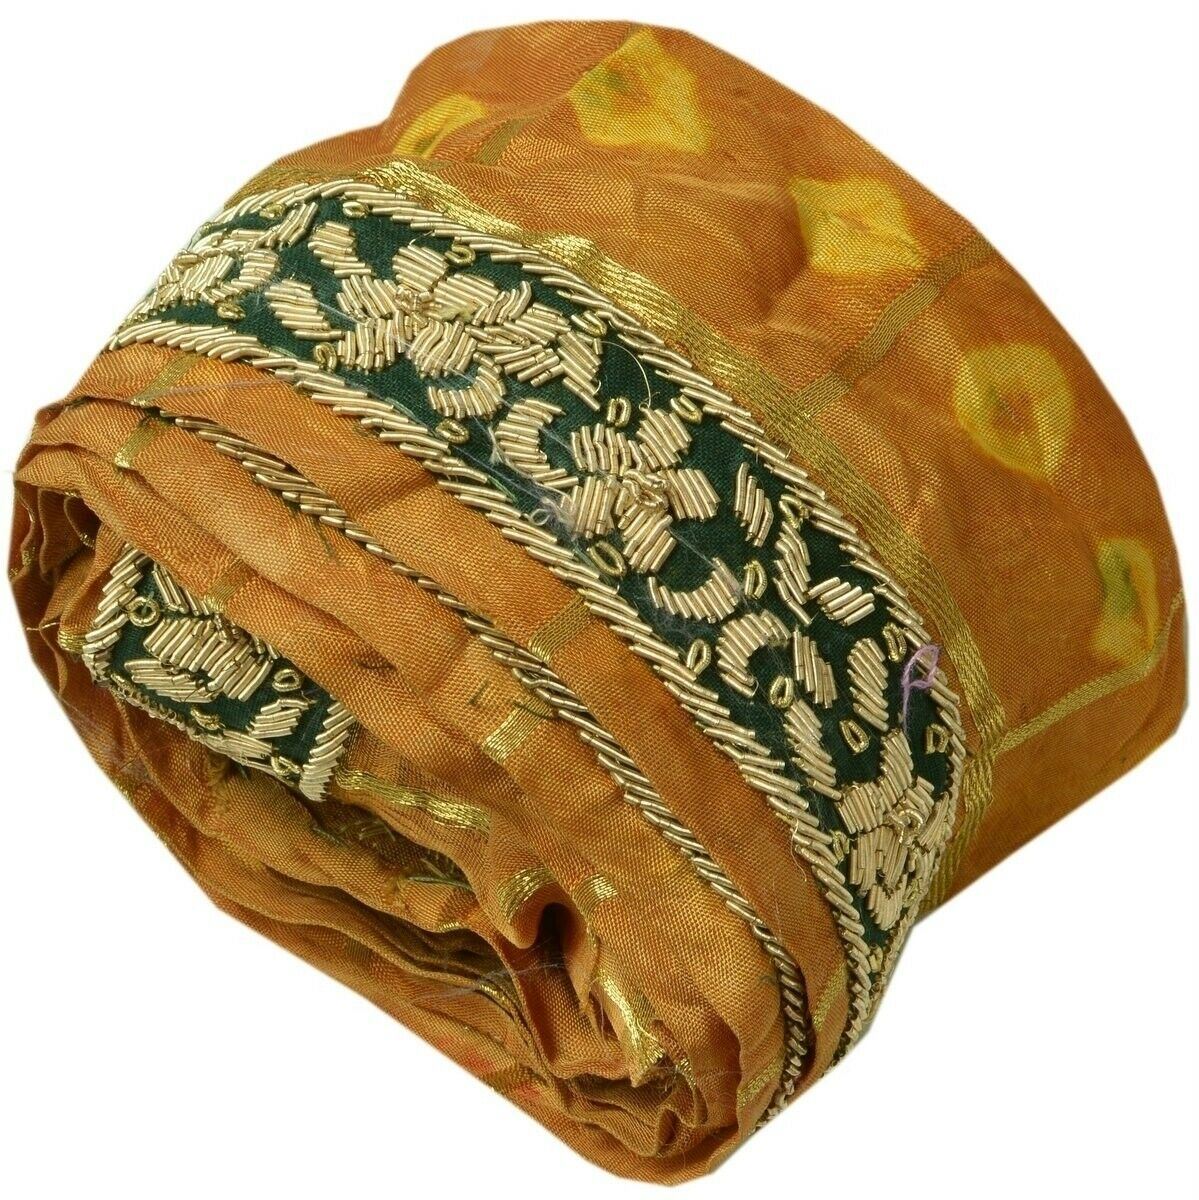 Vintage Sari Border Indian Craft Trim Hand Beaded Zardozi Green Ribbon Lace